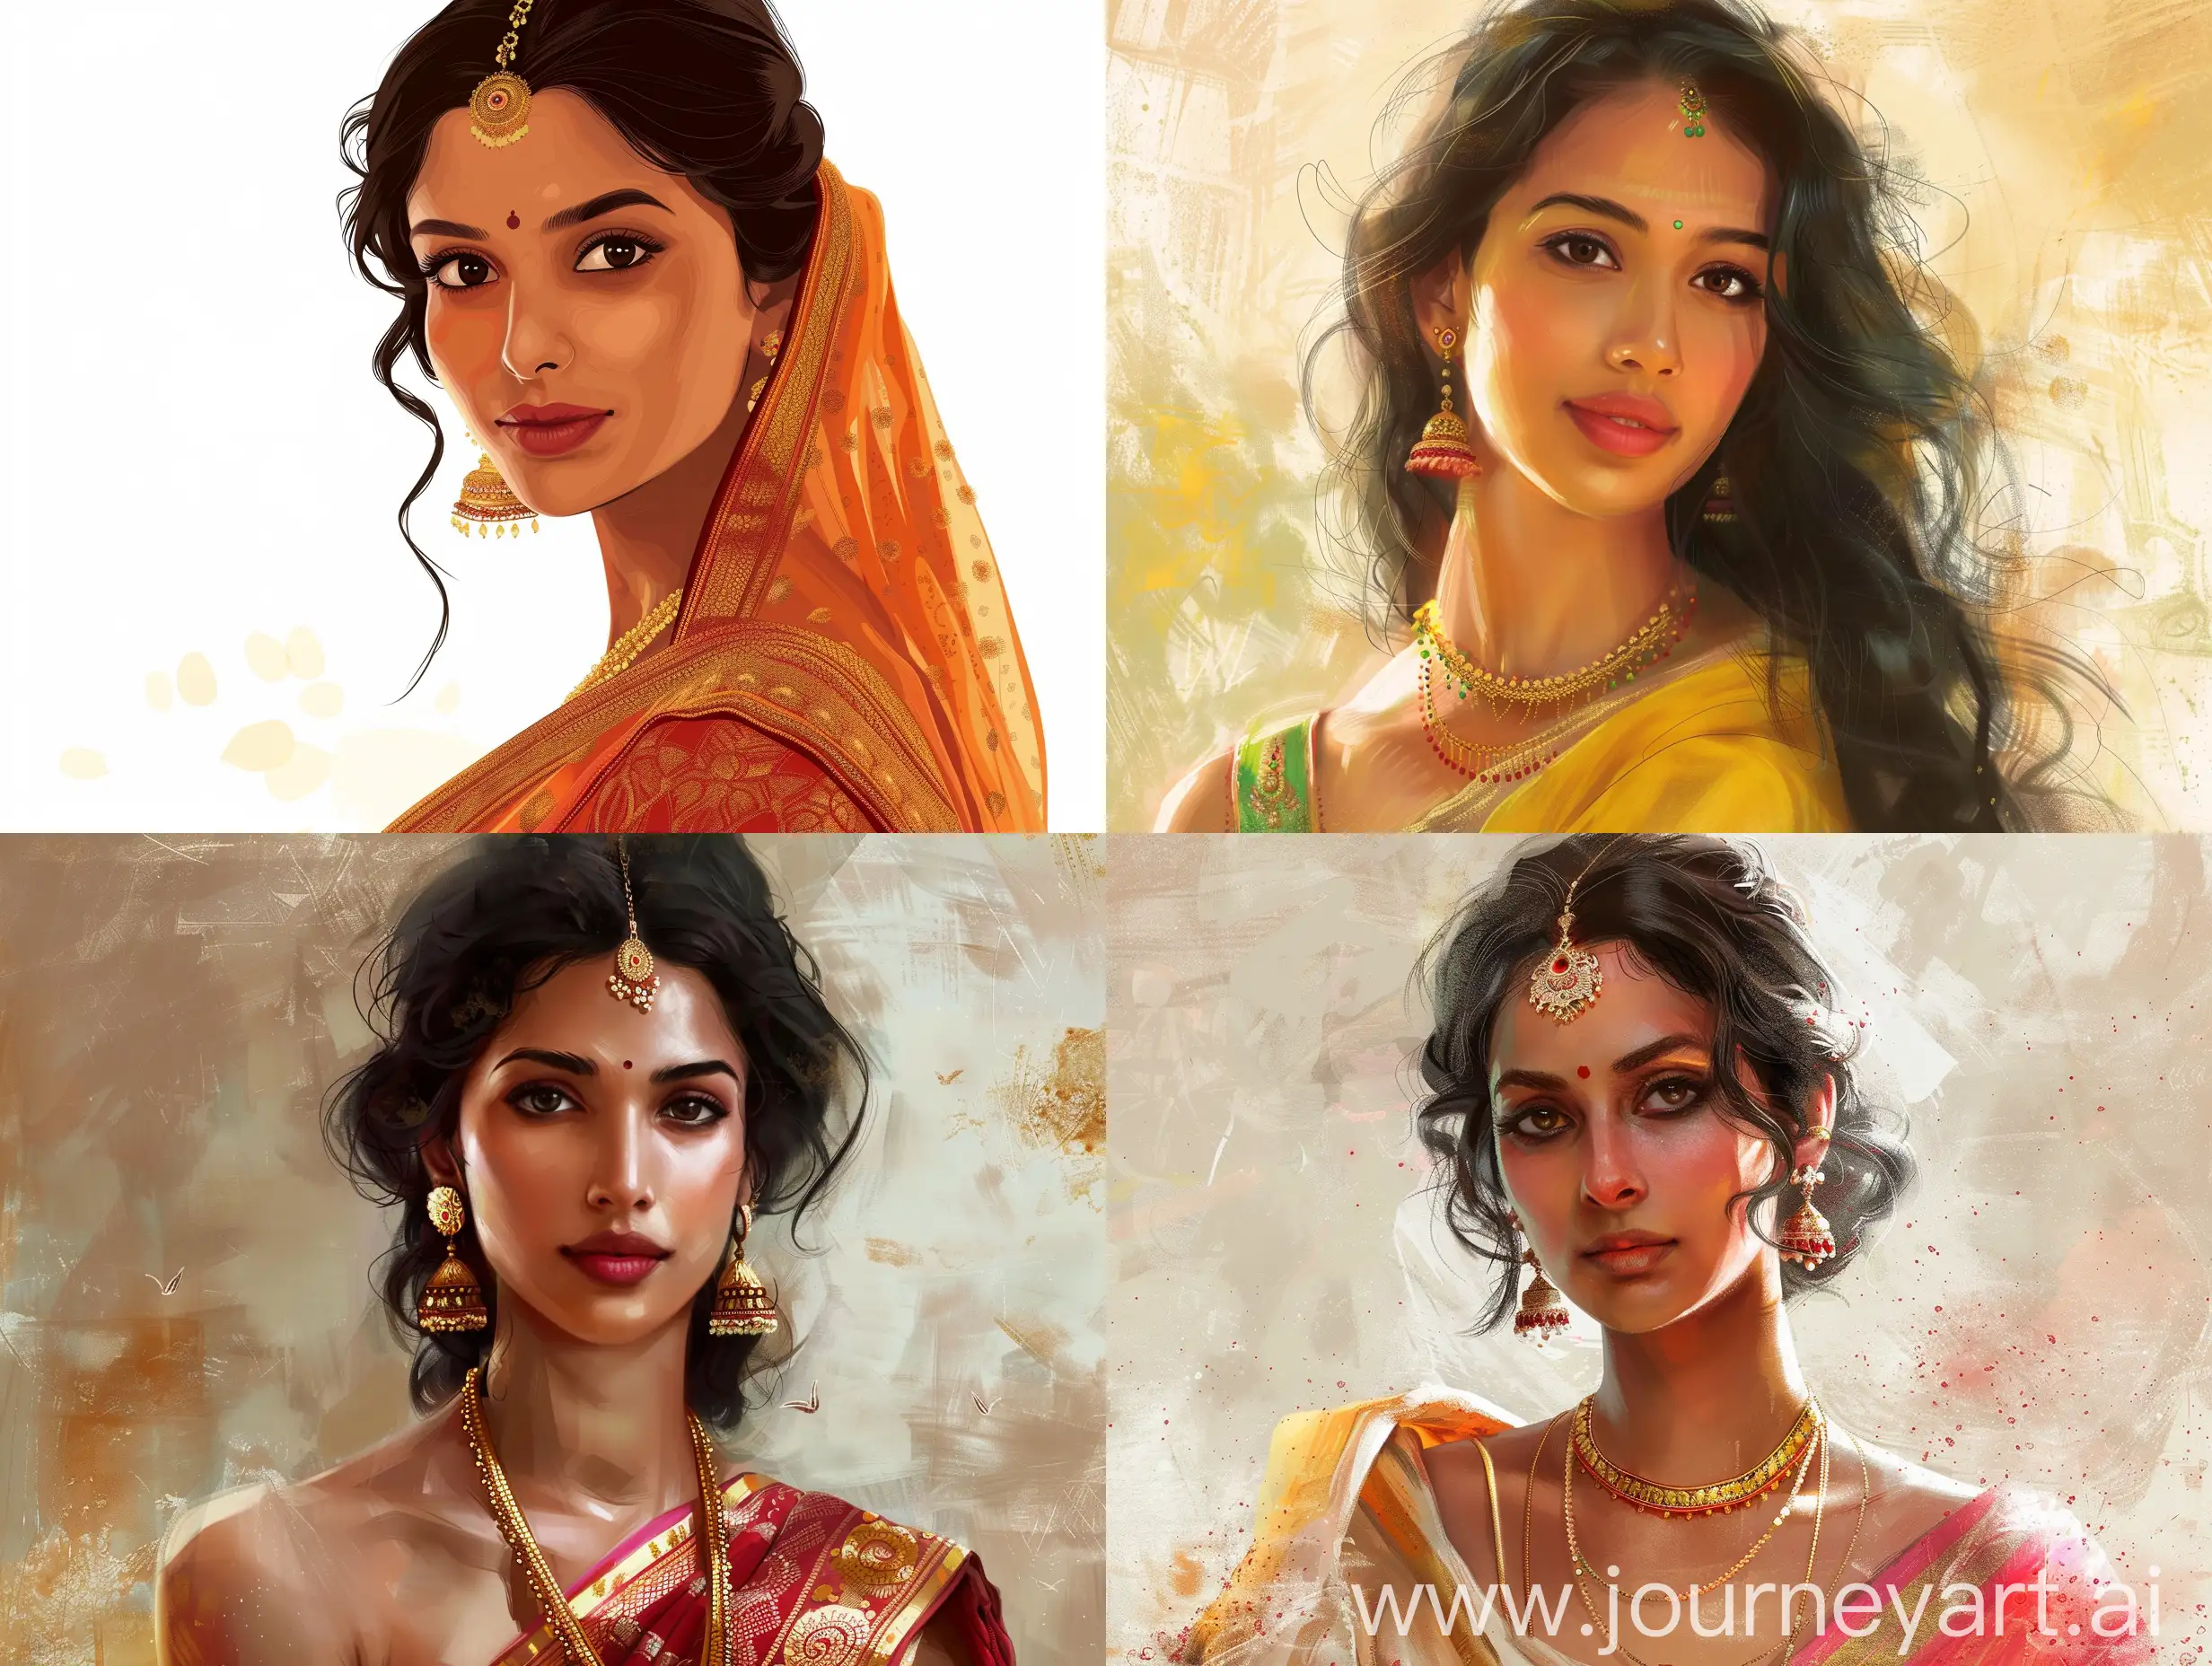 A beautiful Indian woman, illustration